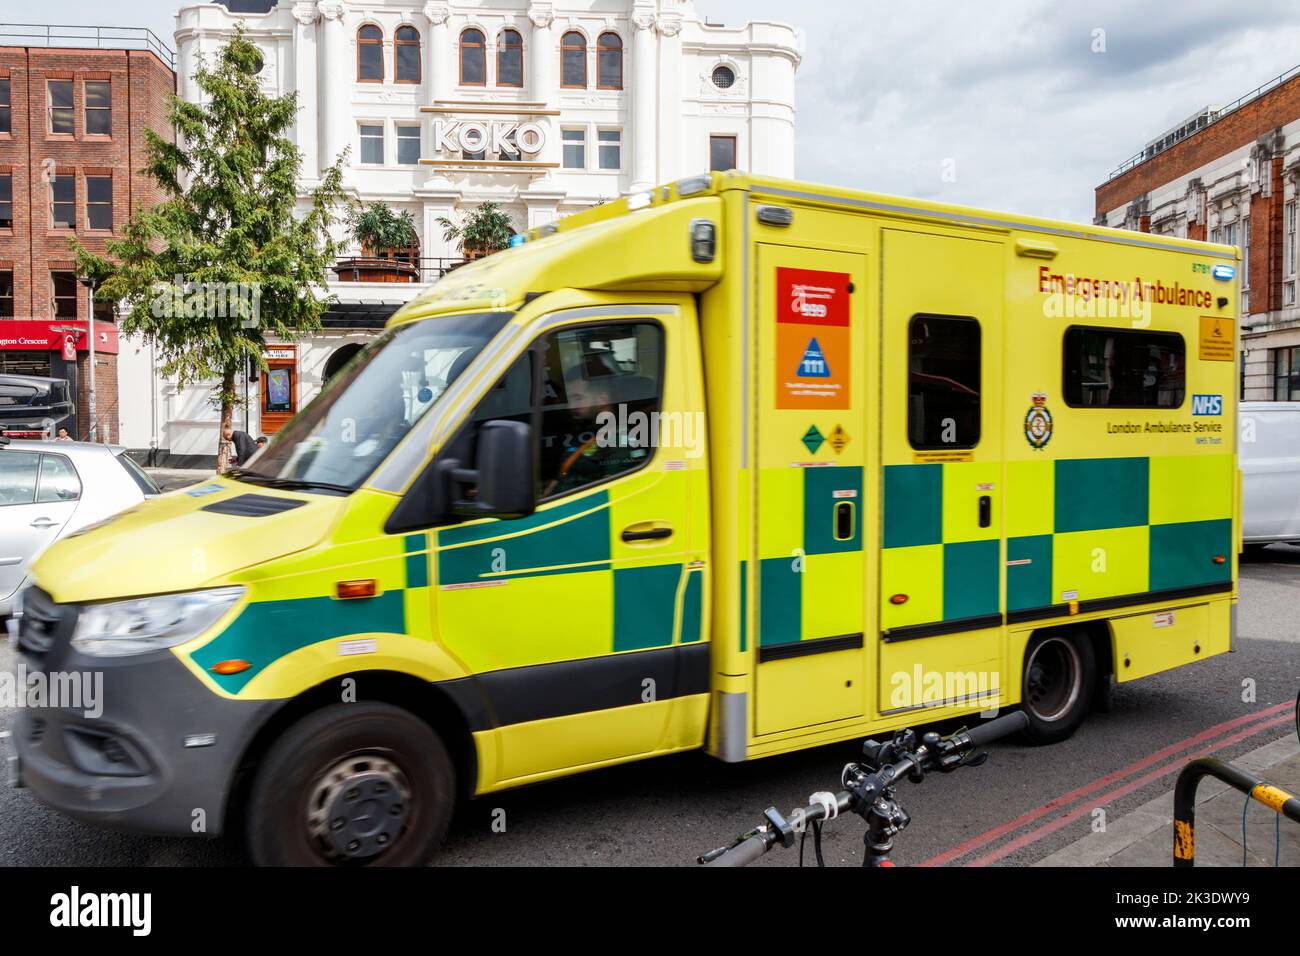 An emergency ambulance speeding on its way to an incident, Camden, London, UK Stock Photo